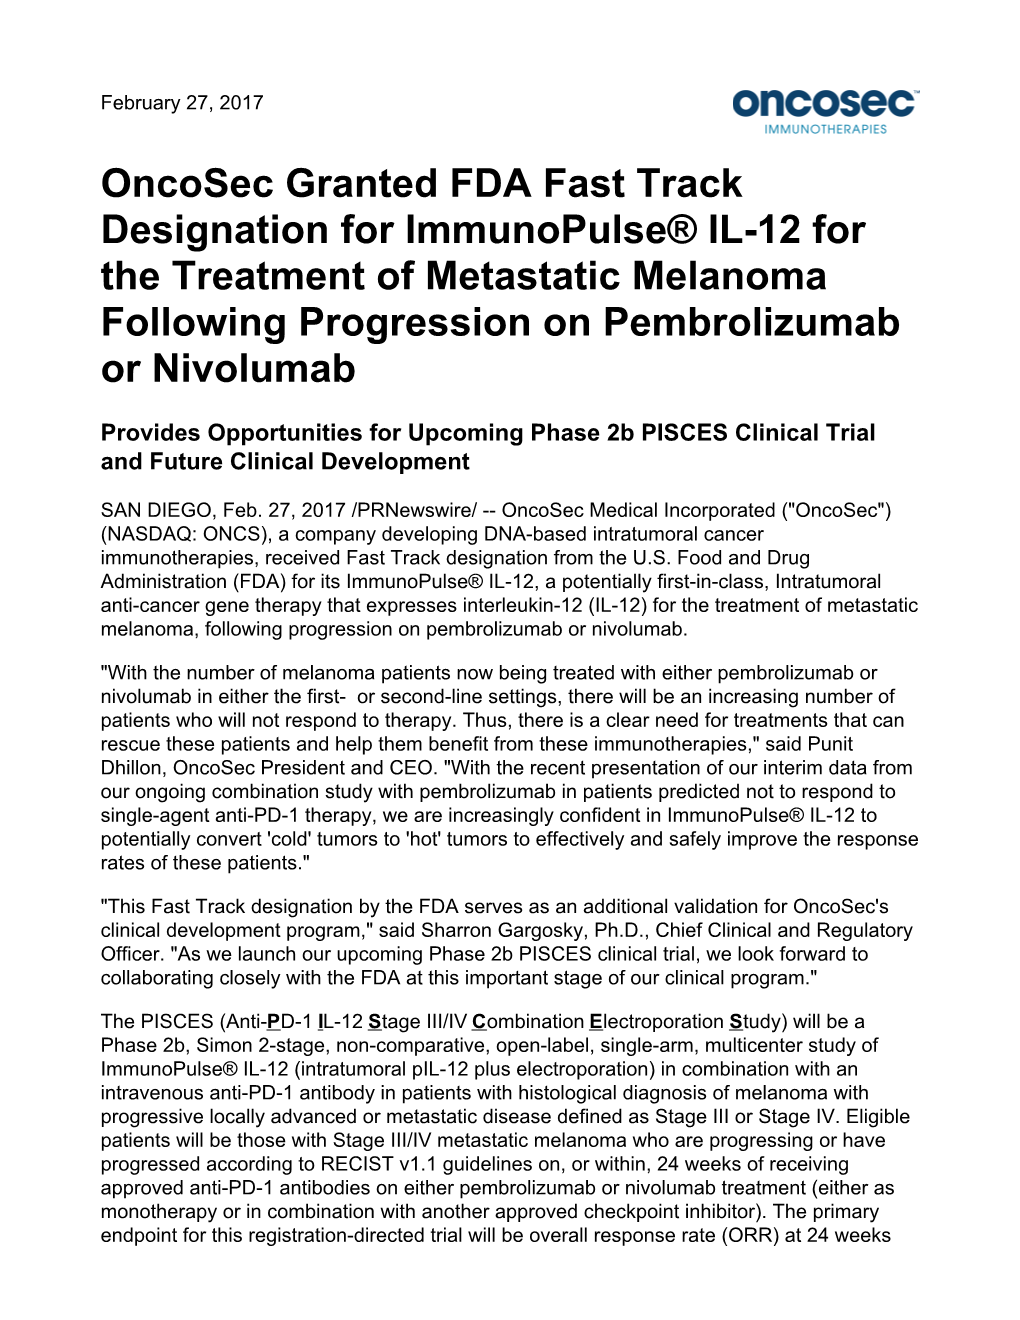 Oncosec Granted FDA Fast Track Designation for Immunopulse® IL-12 for the Treatment of Metastatic Melanoma Following Progression on Pembrolizumab Or Nivolumab